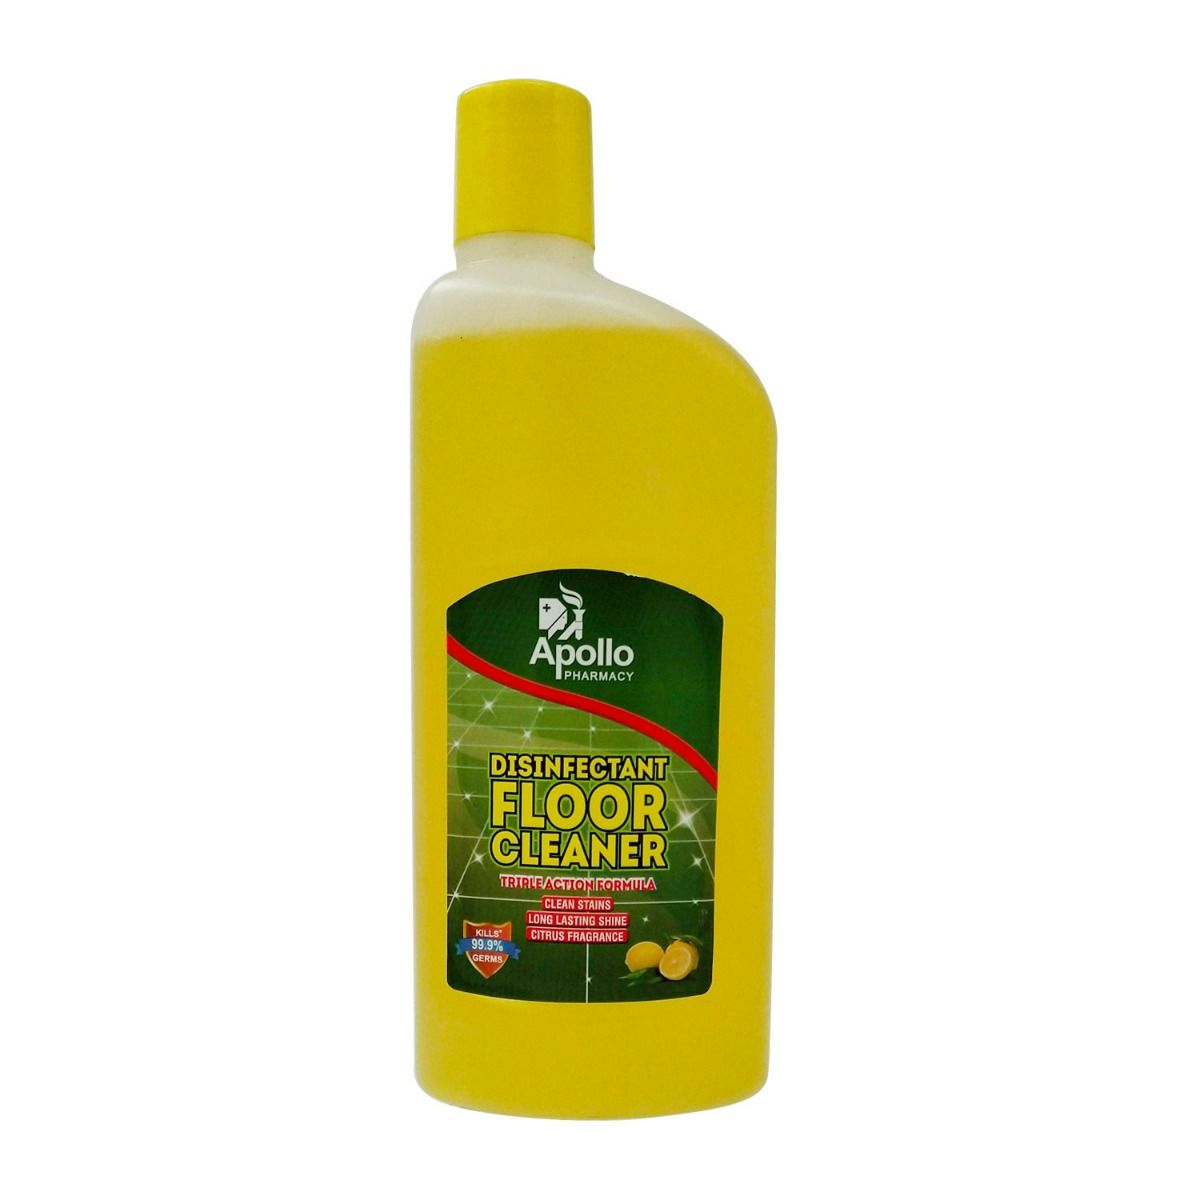 Apollo Pharmacy Disinfectant Floor Cleaner, 400 ml, Pack of 1 